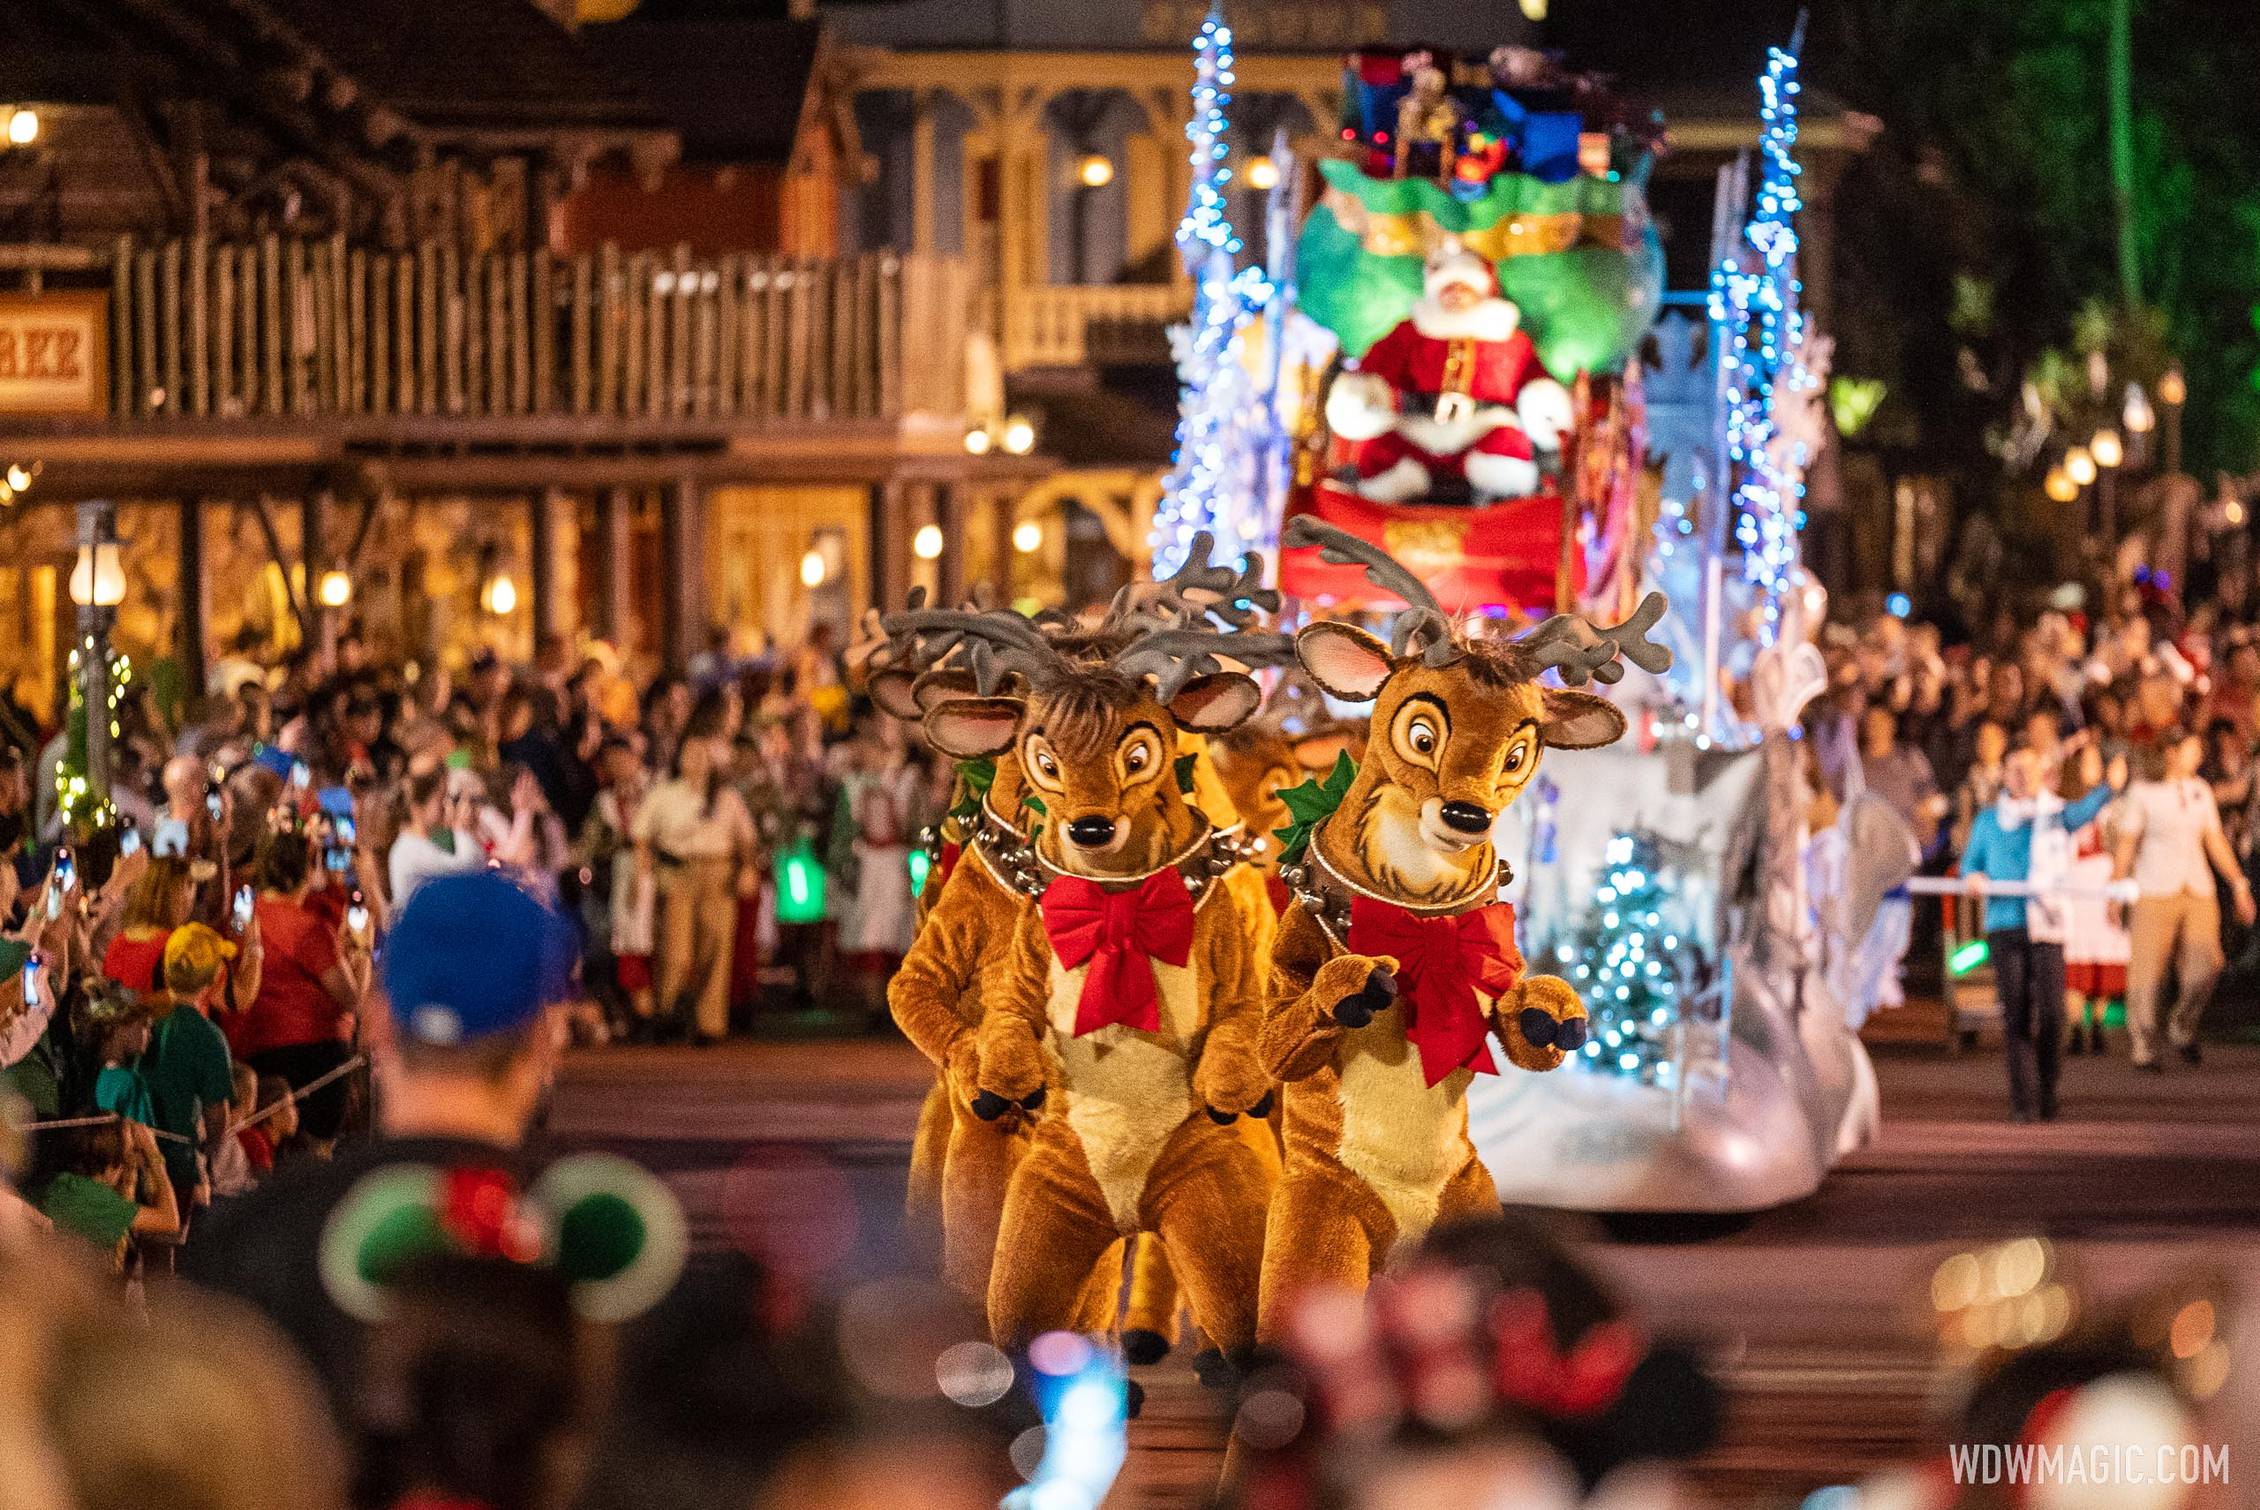 Mickeys-Once-Upon-a-Christmastime-Parade_Full_49568.jpg